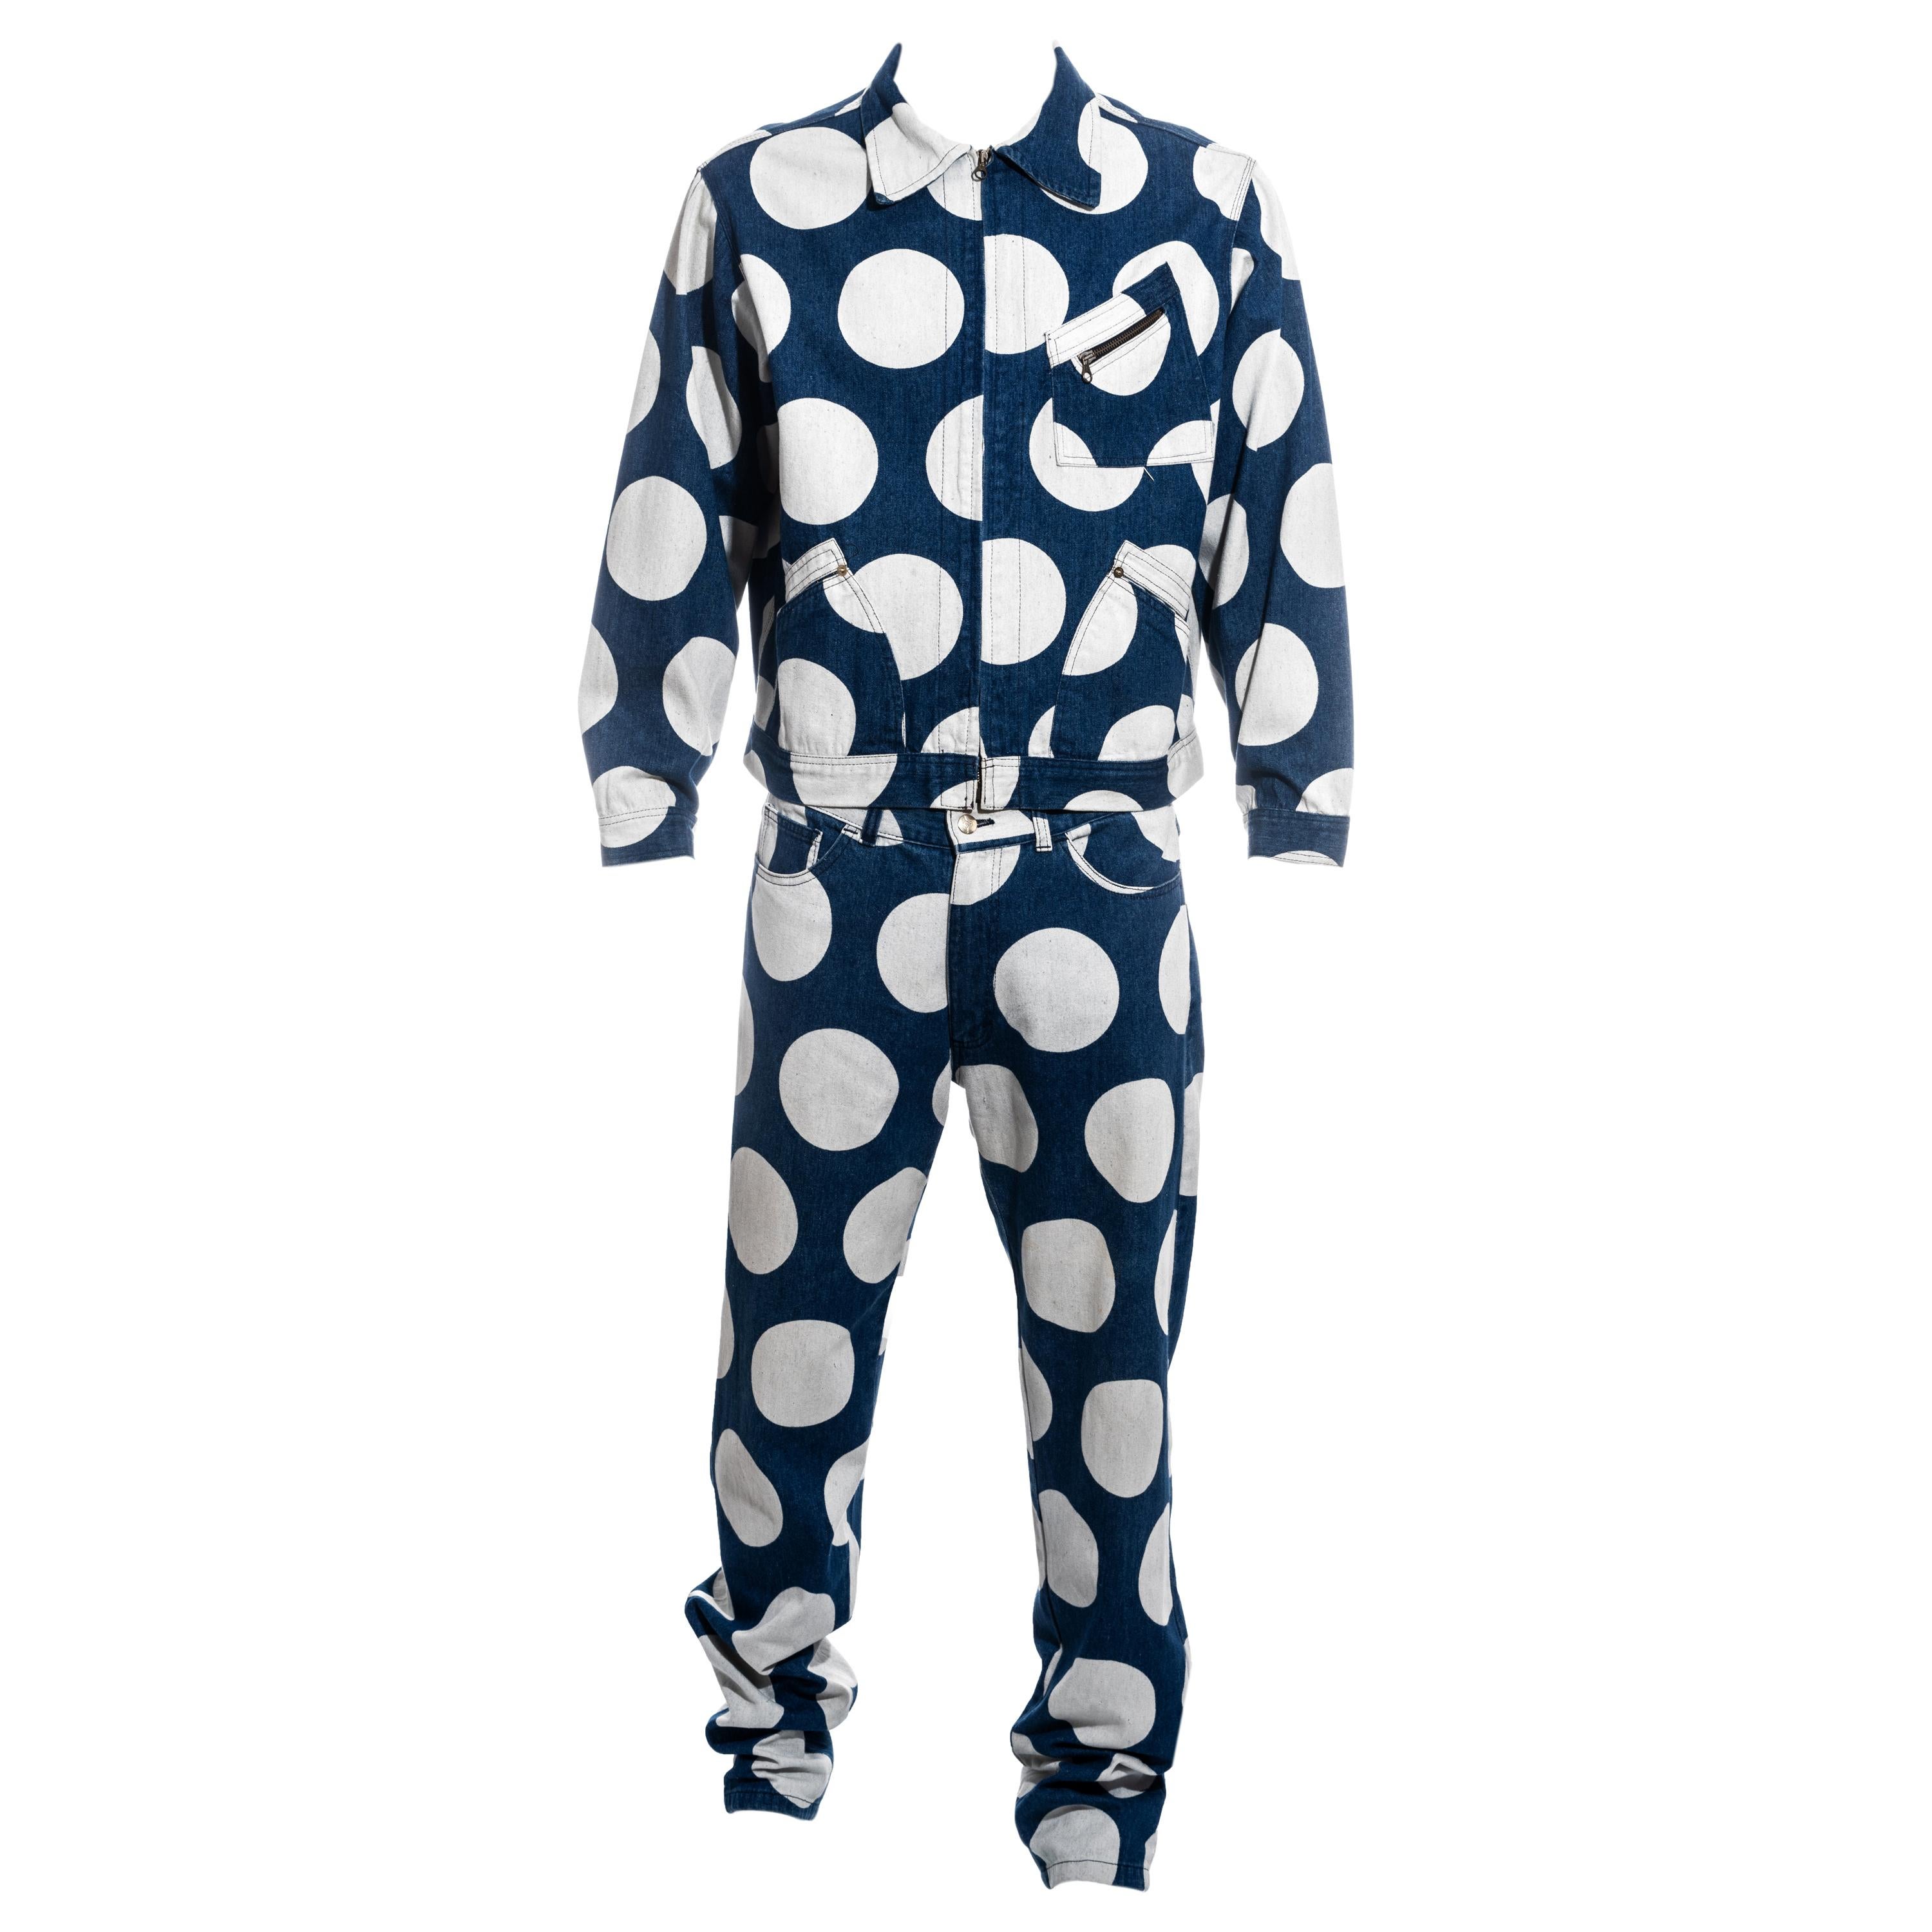 Men's Vivienne Westwood blue and white polka dot denim pant suit, SS 1985